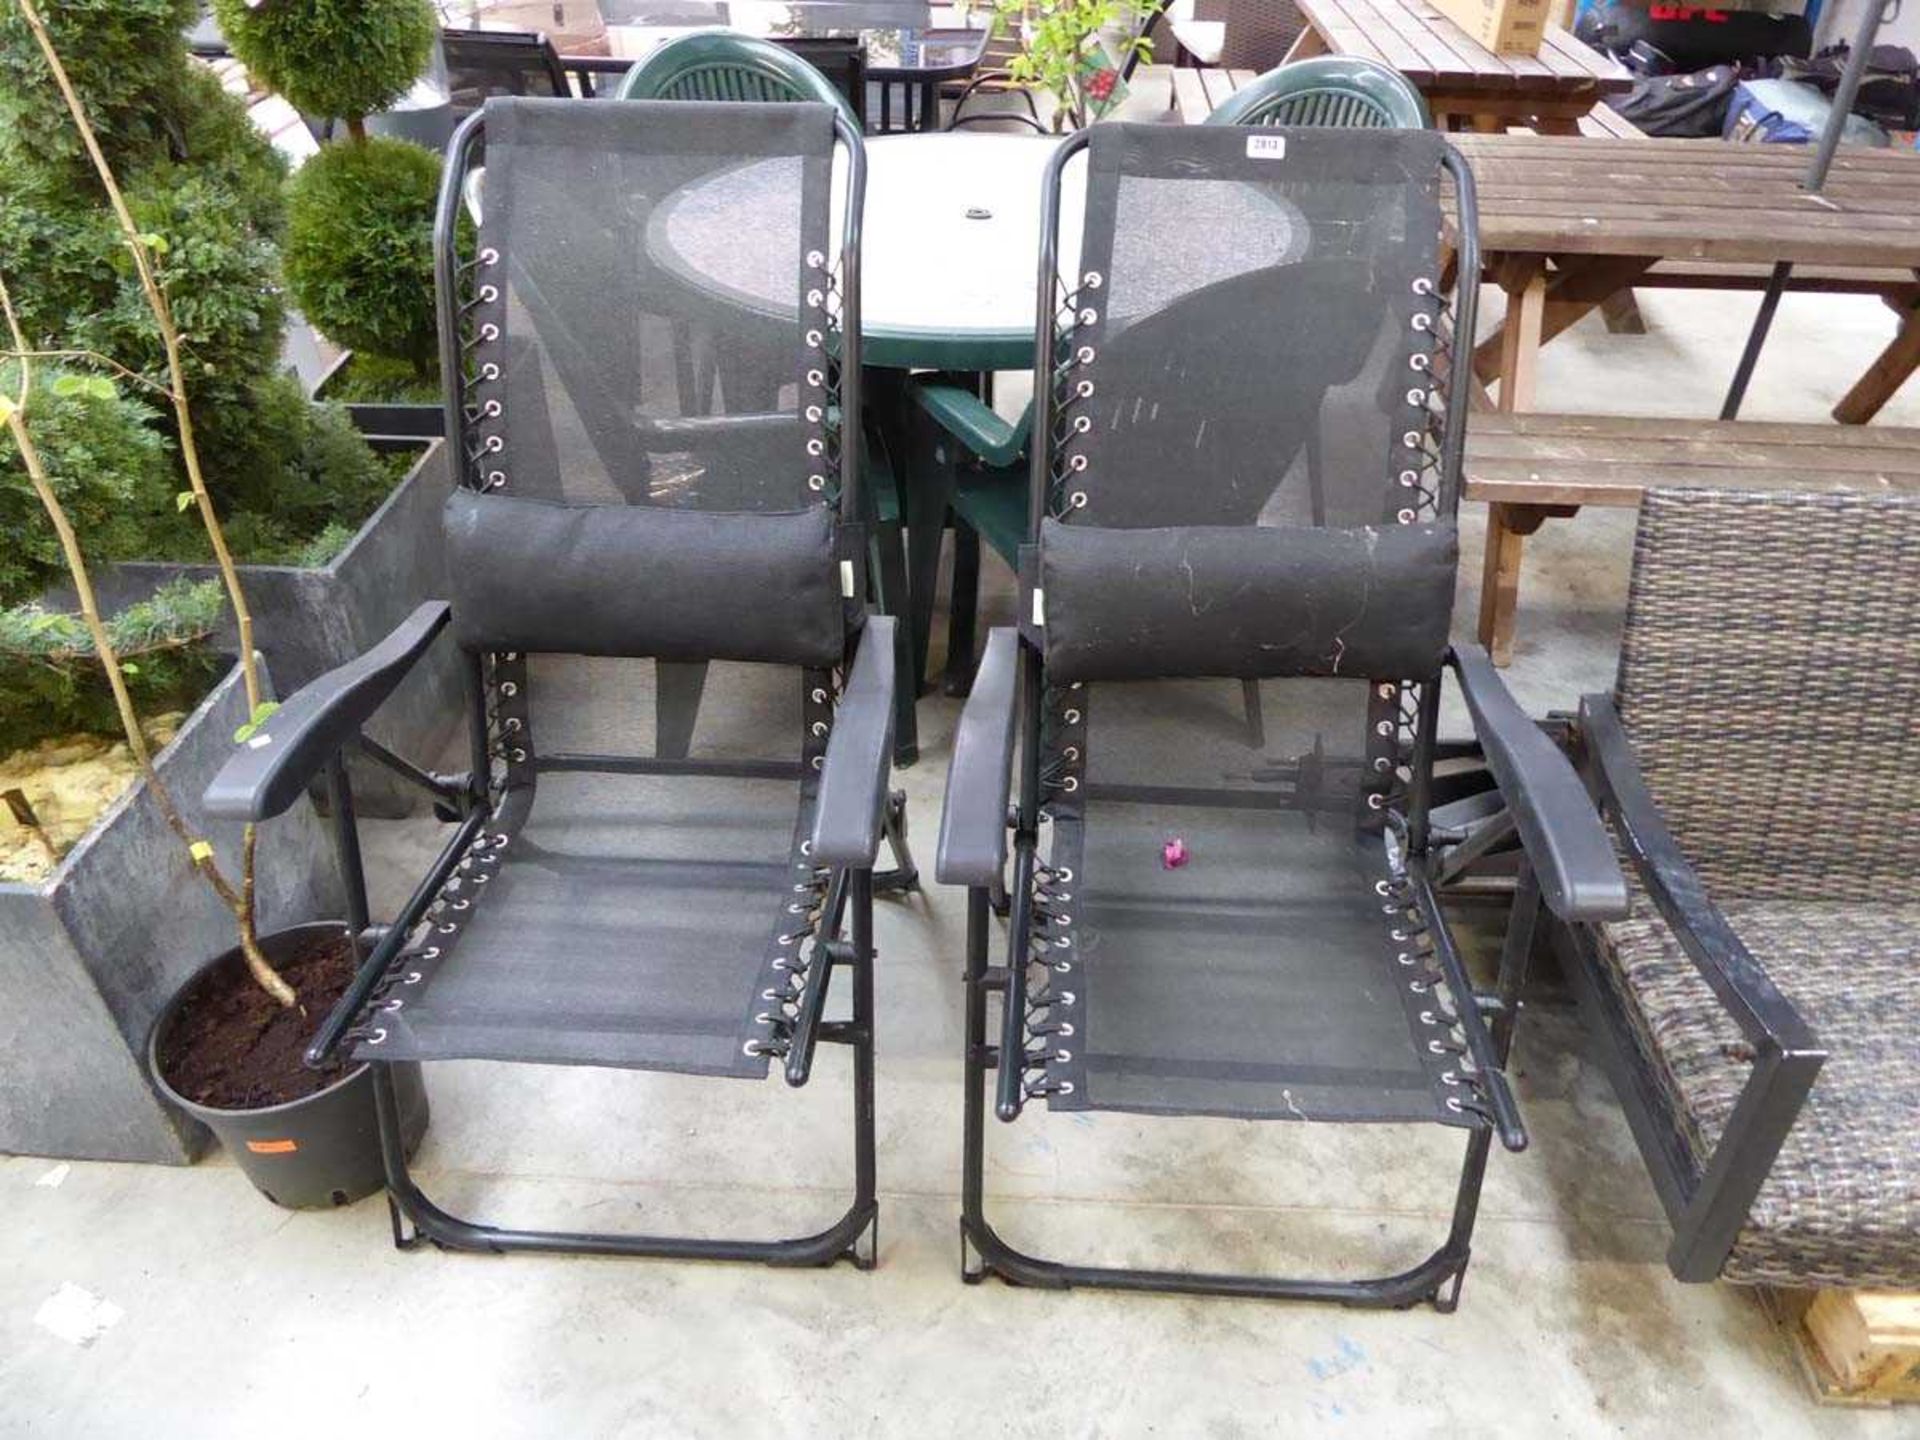 Pair of black folding reclining garden chairs